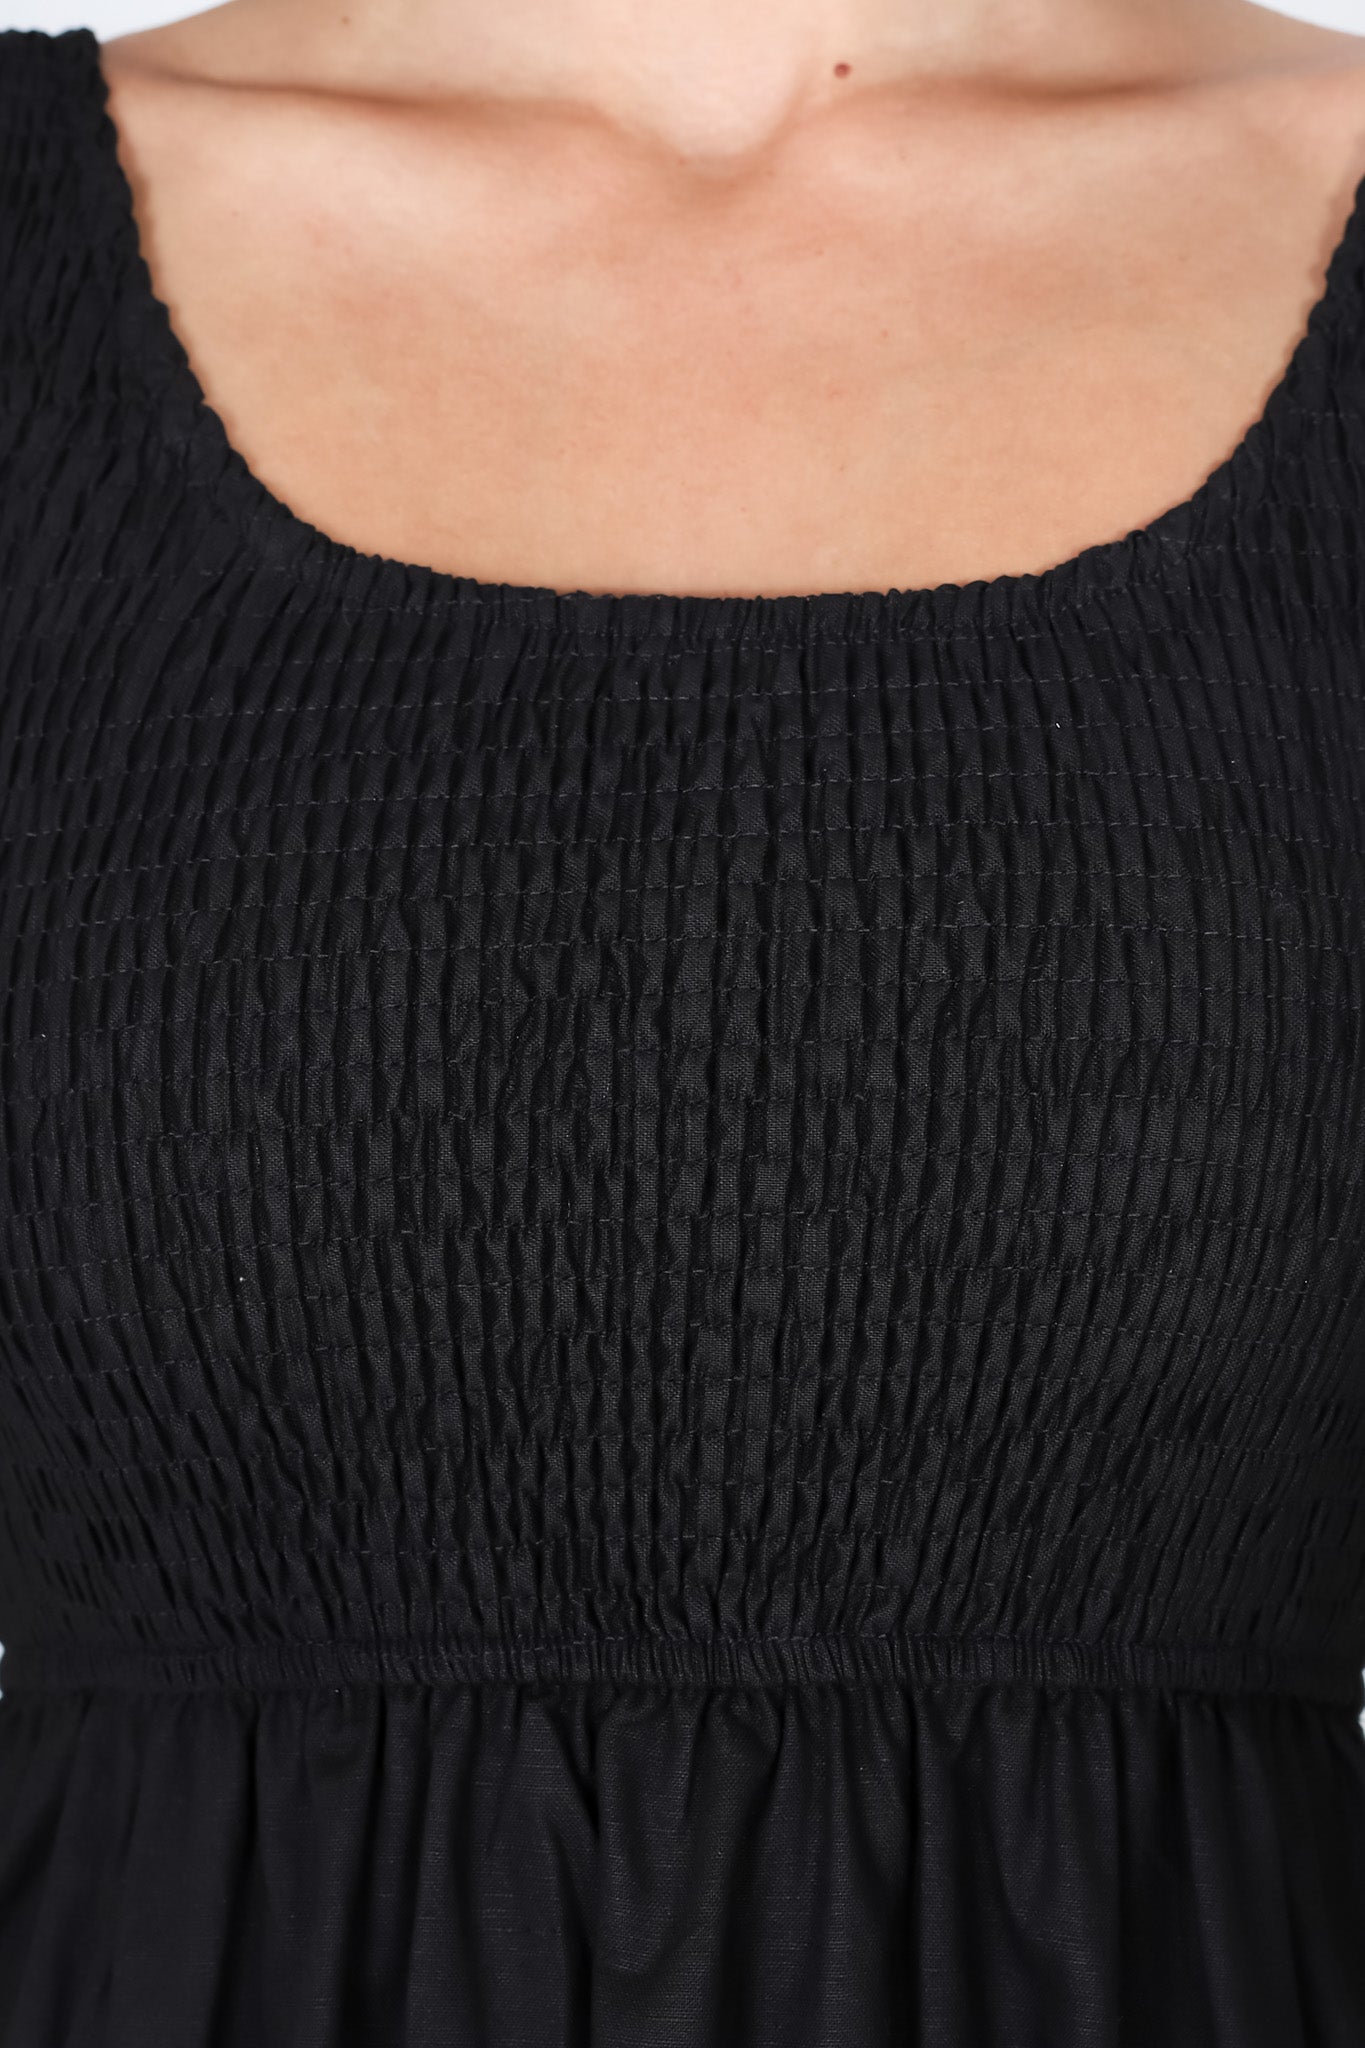 Sarlie Midi Dress - Shirred Bodice Cotton/Linen Blend Tiered Dress in Black